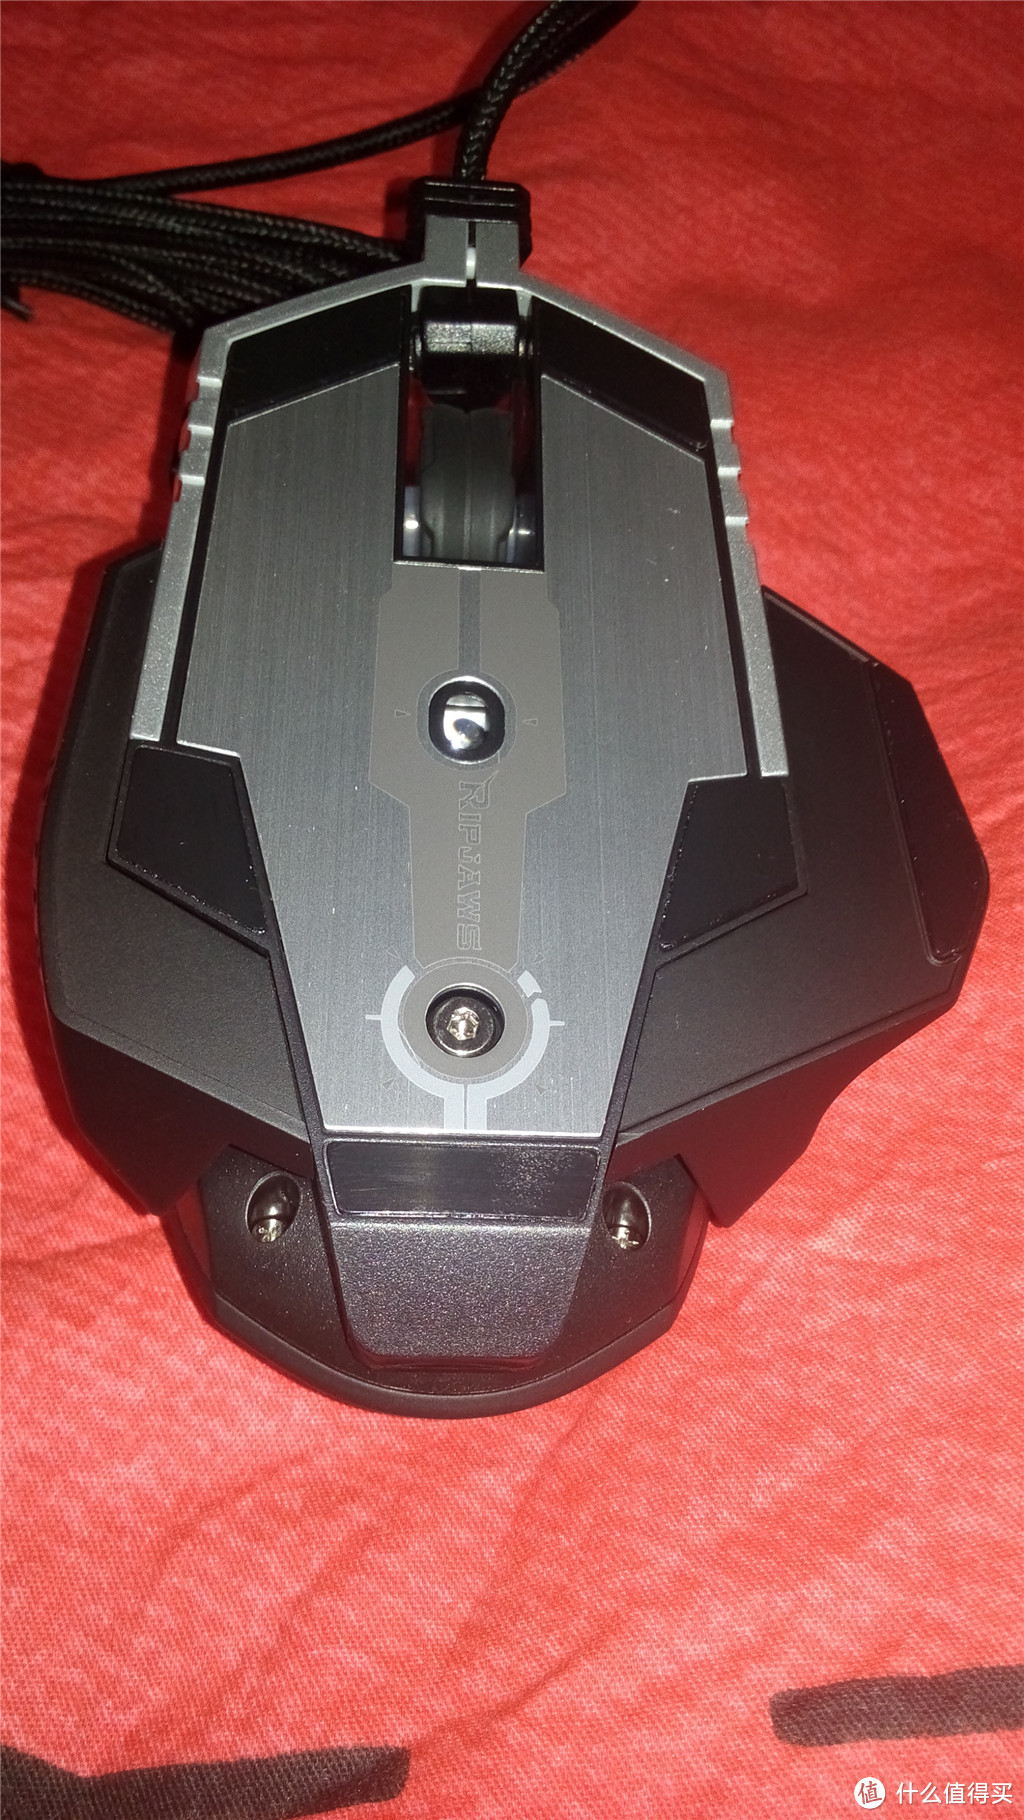 G.SKILL 芝奇 MX780 游戏鼠标 使用感受